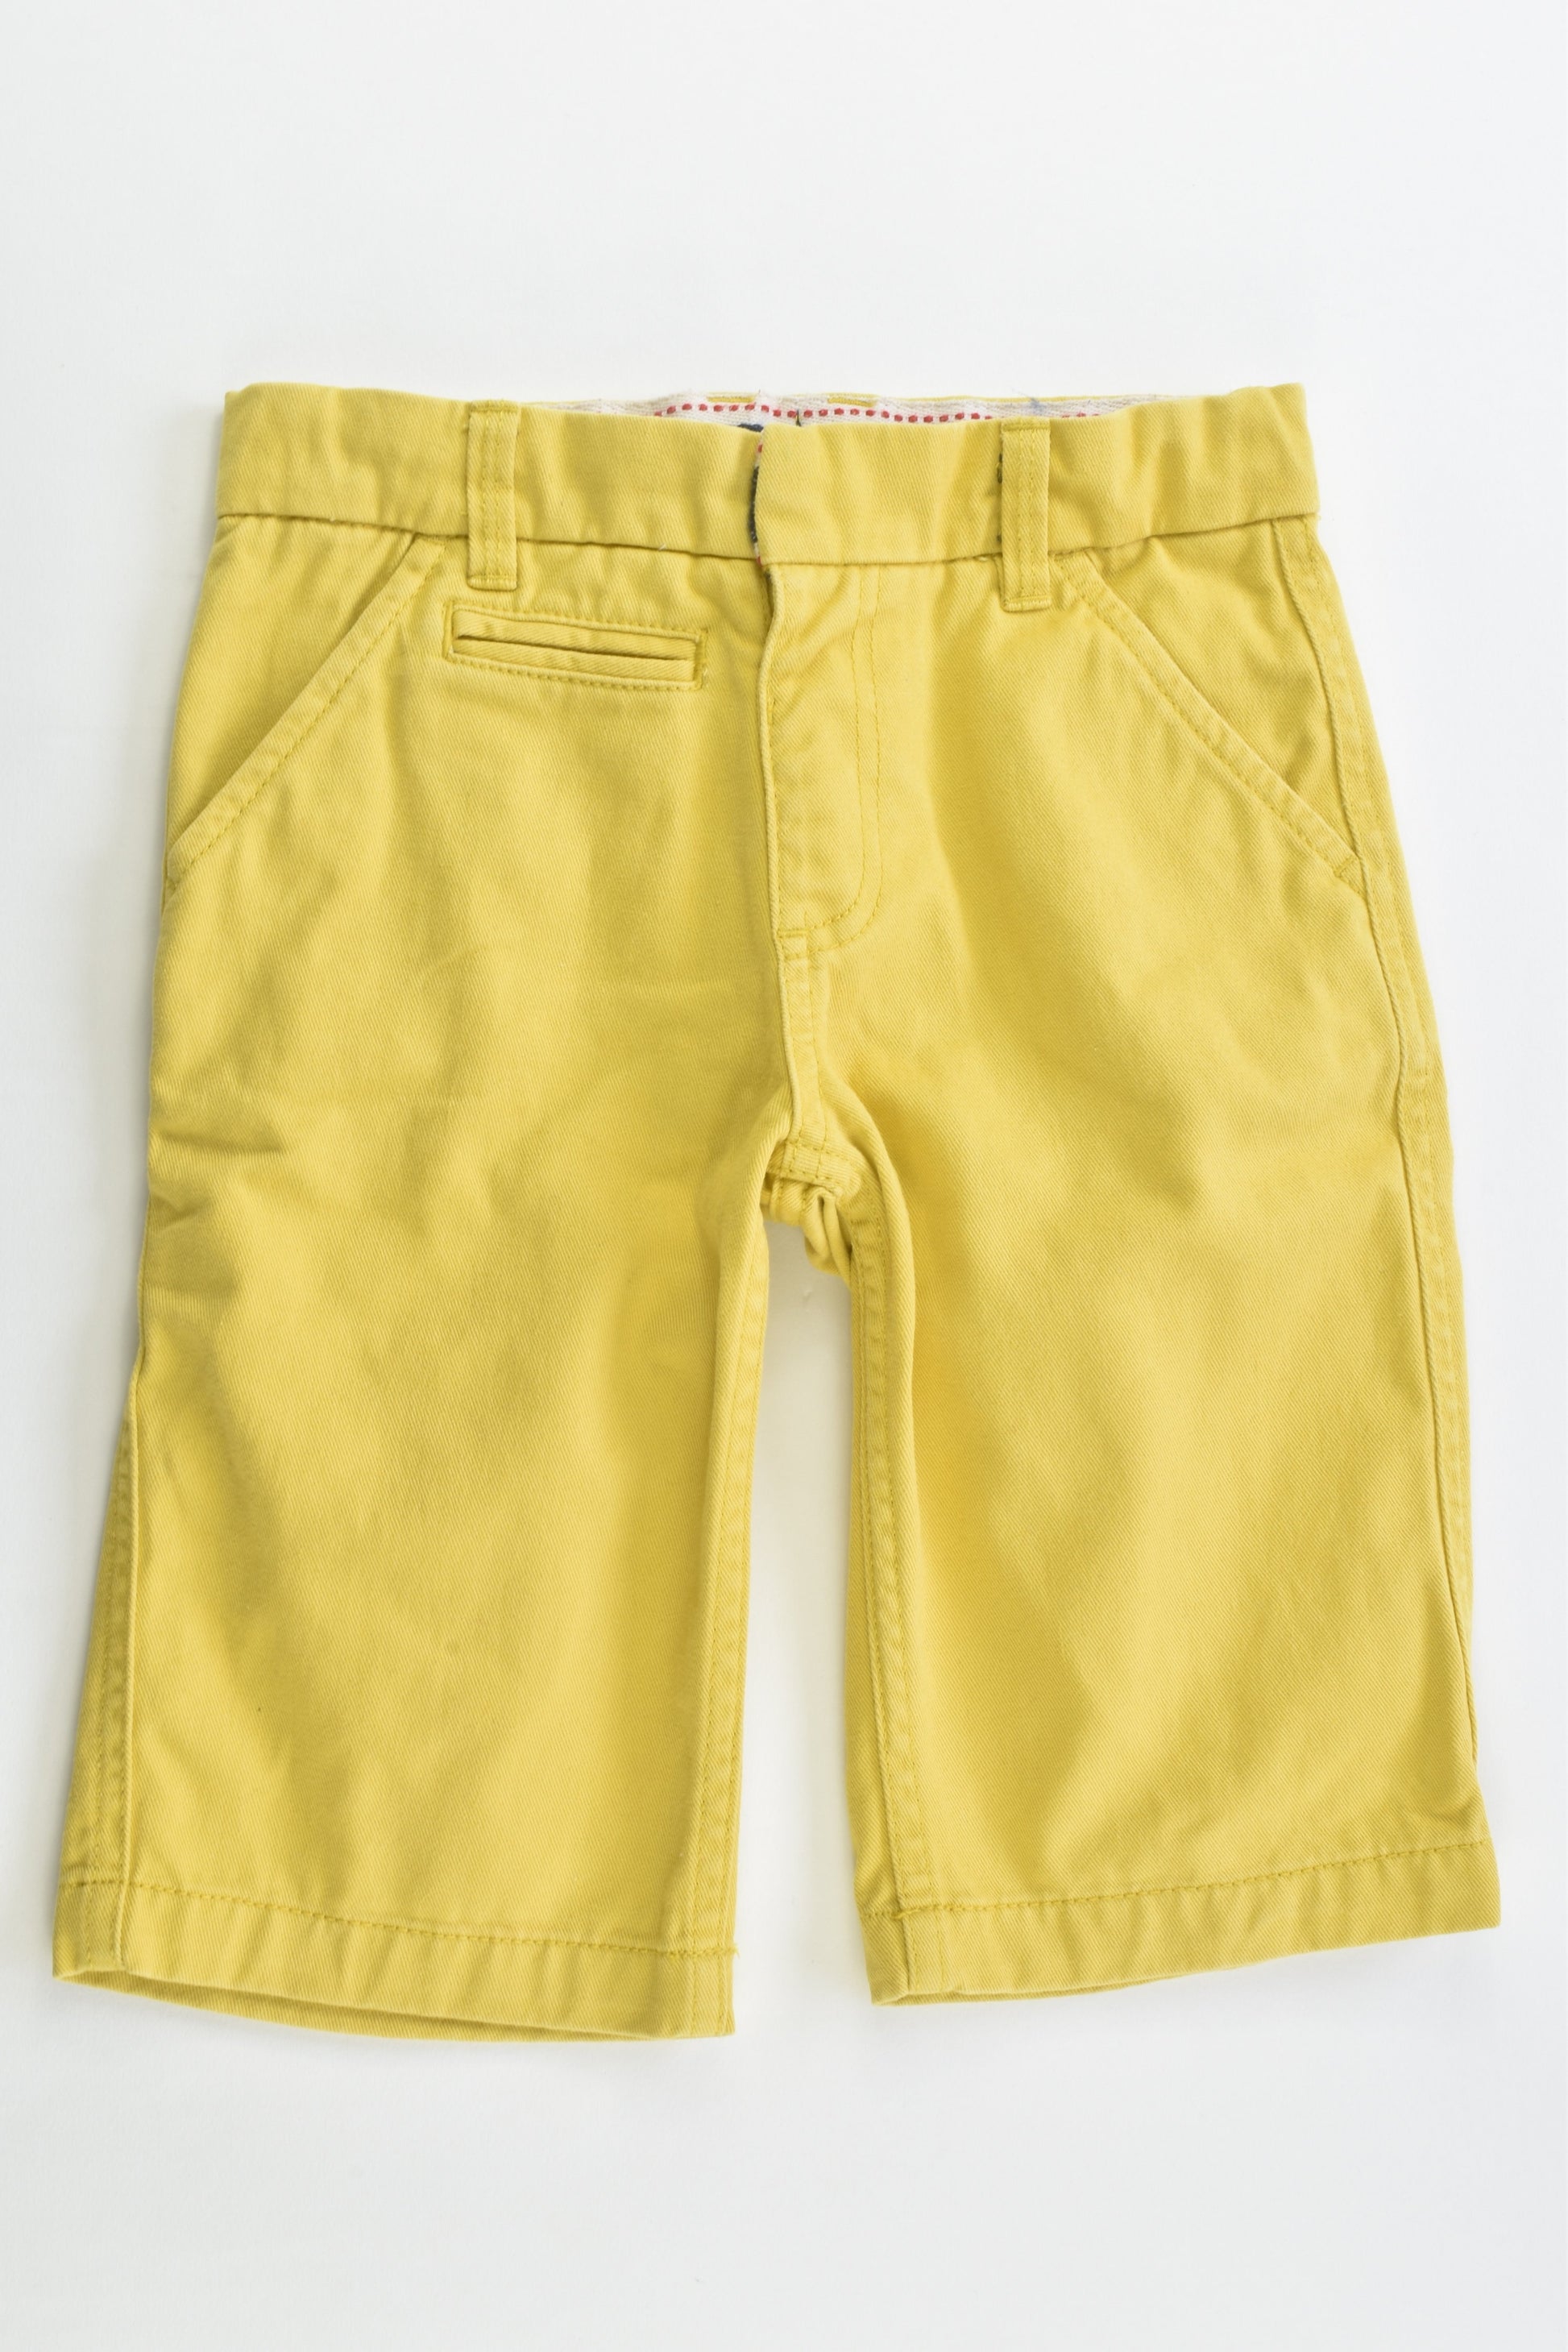 Mini Club Size 4-5 (104-110 cm) Shorts